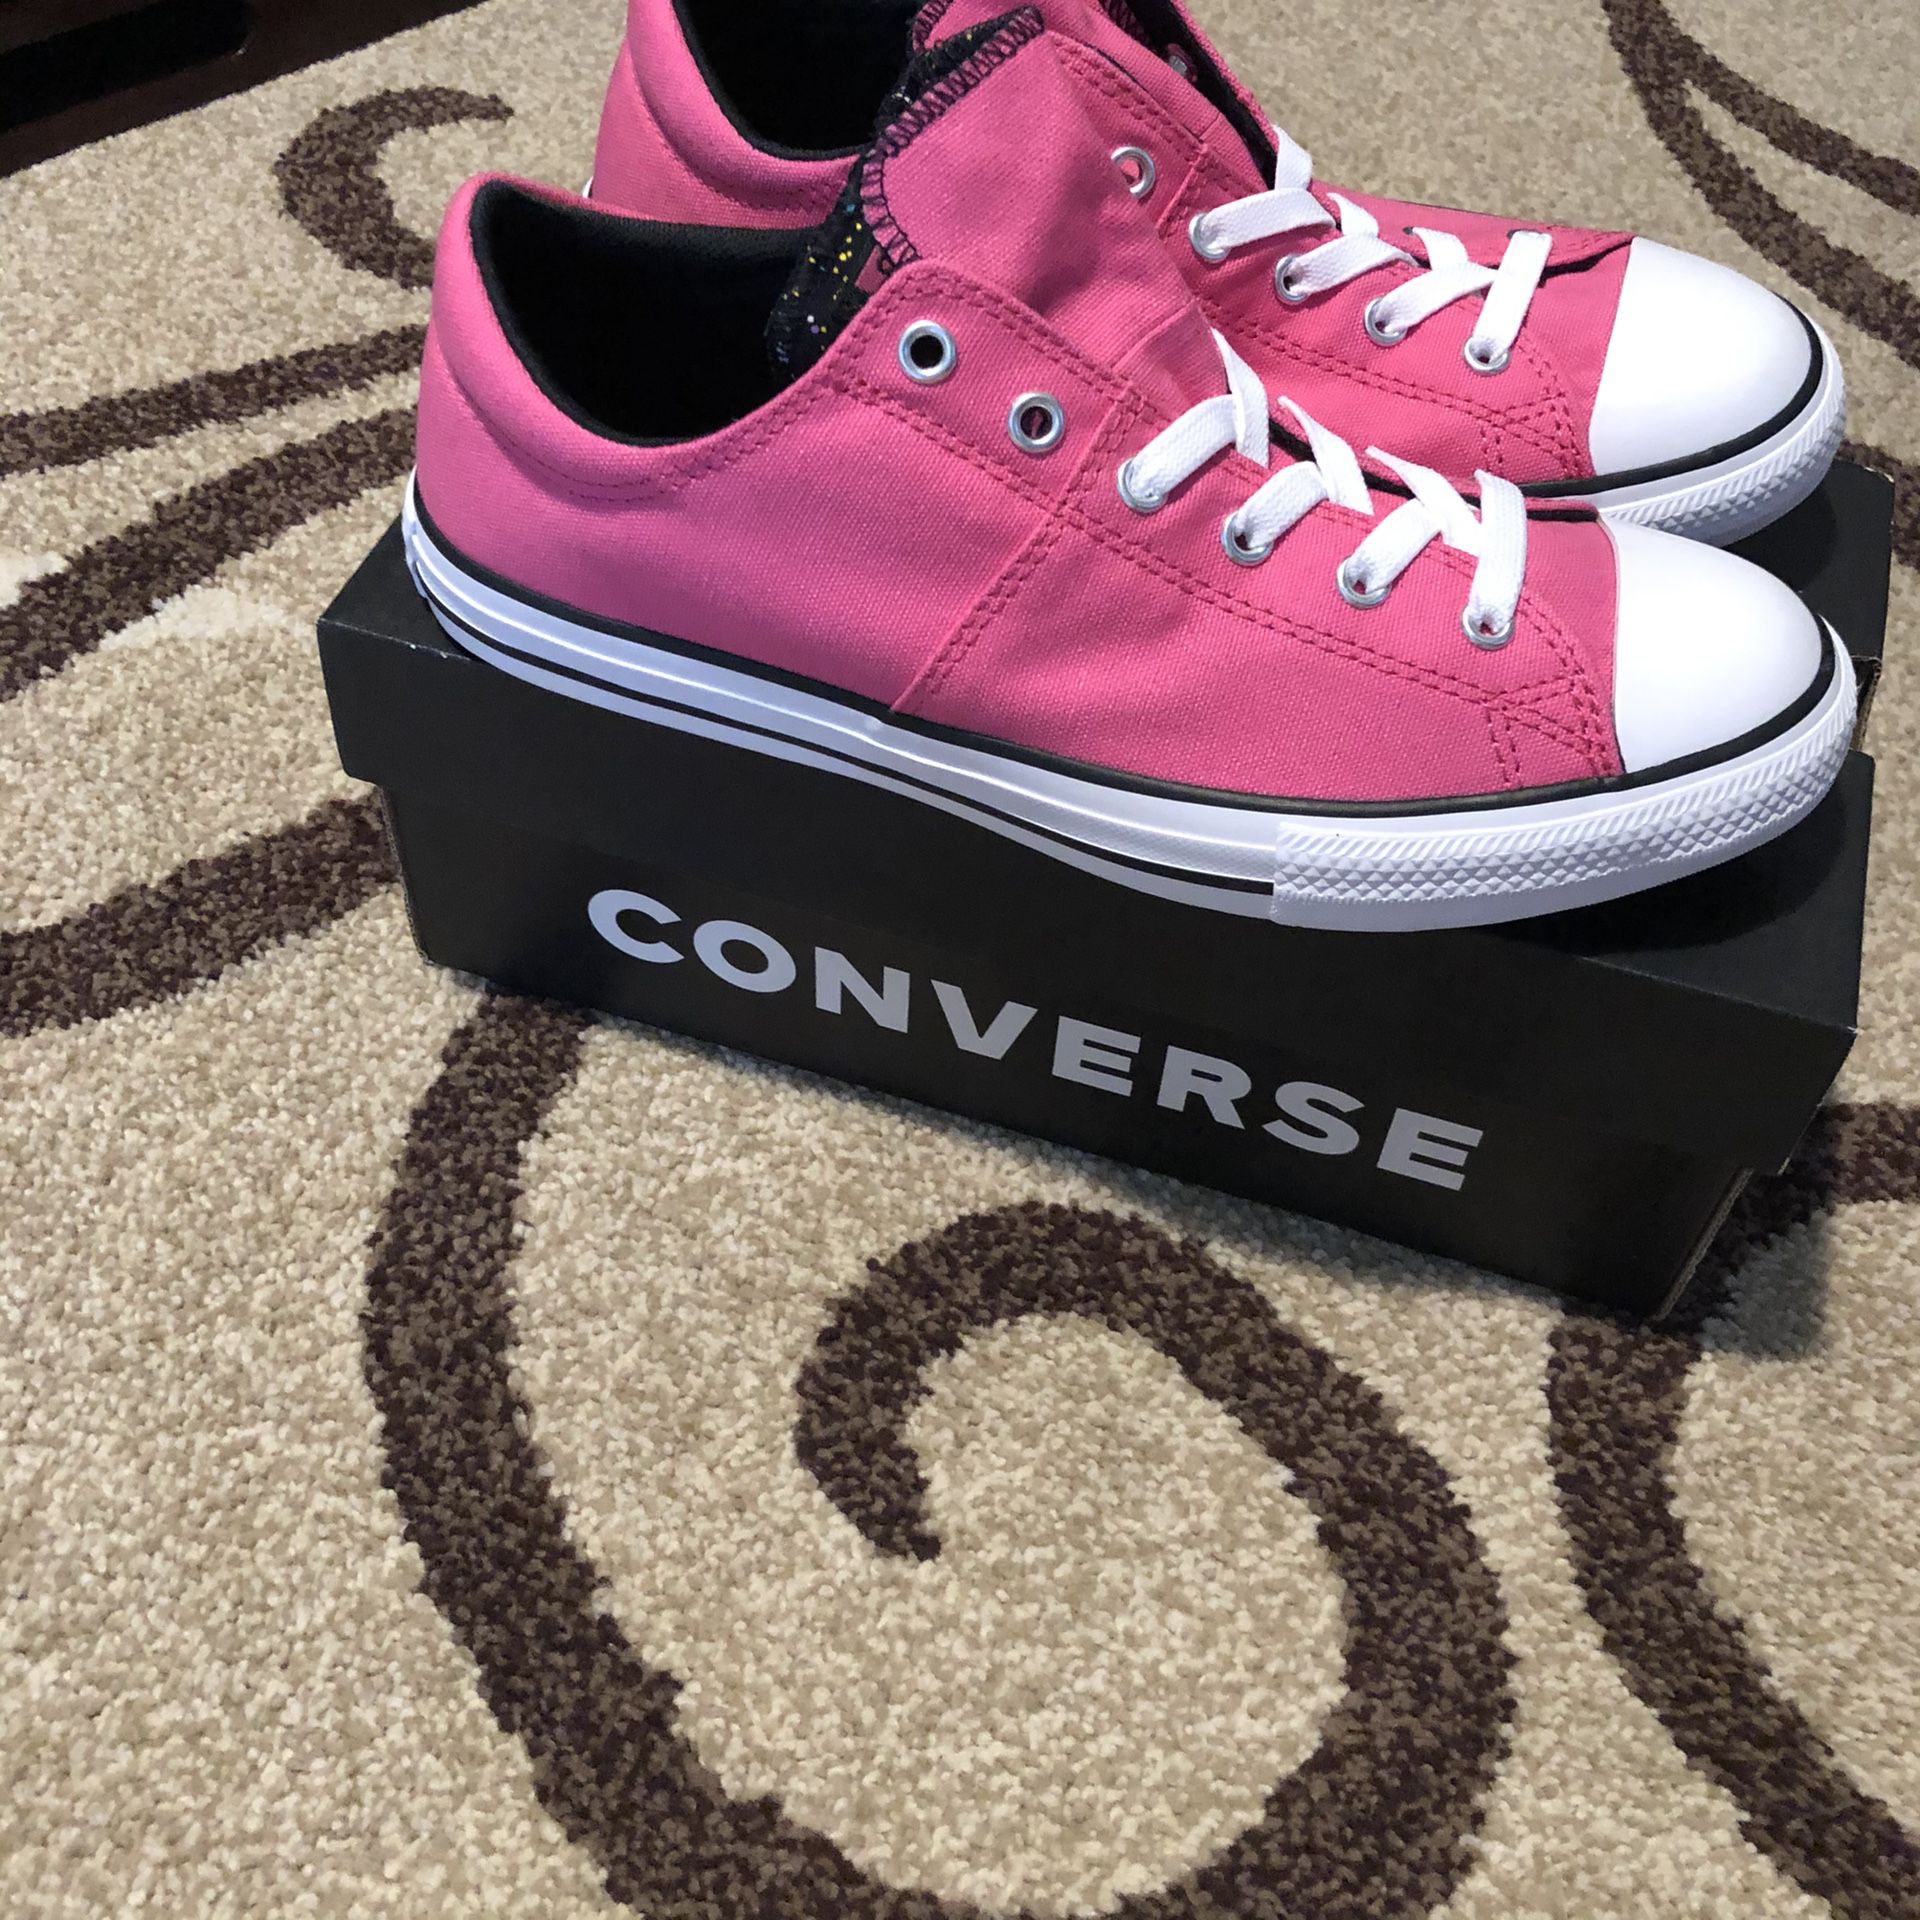 New Converse size 6Junior